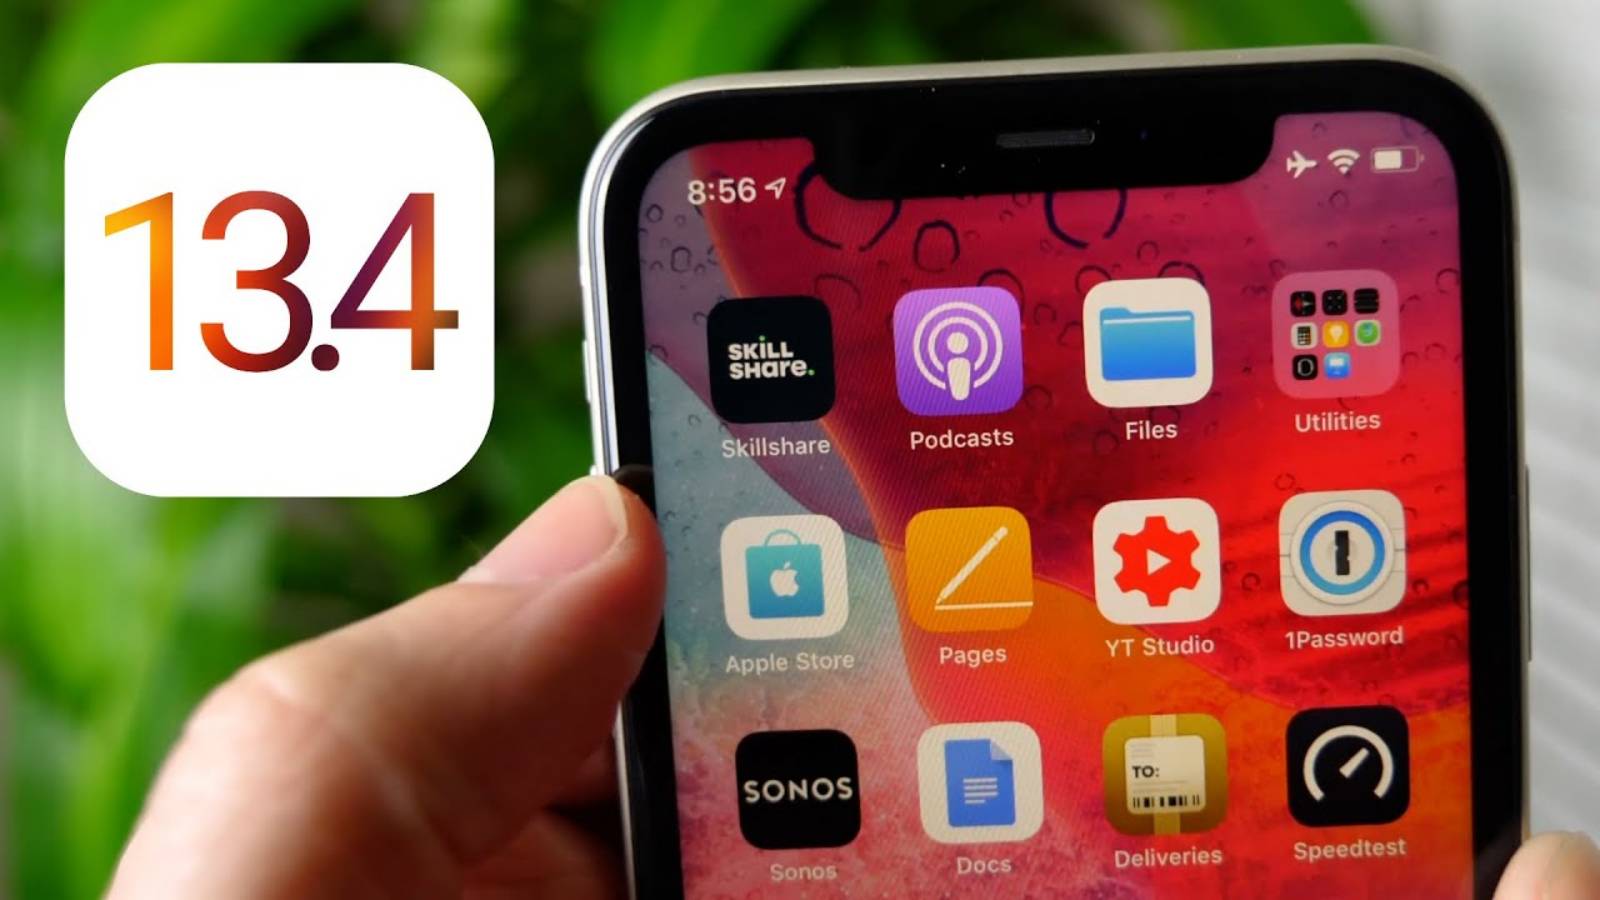 iOS 13.4 beta 3